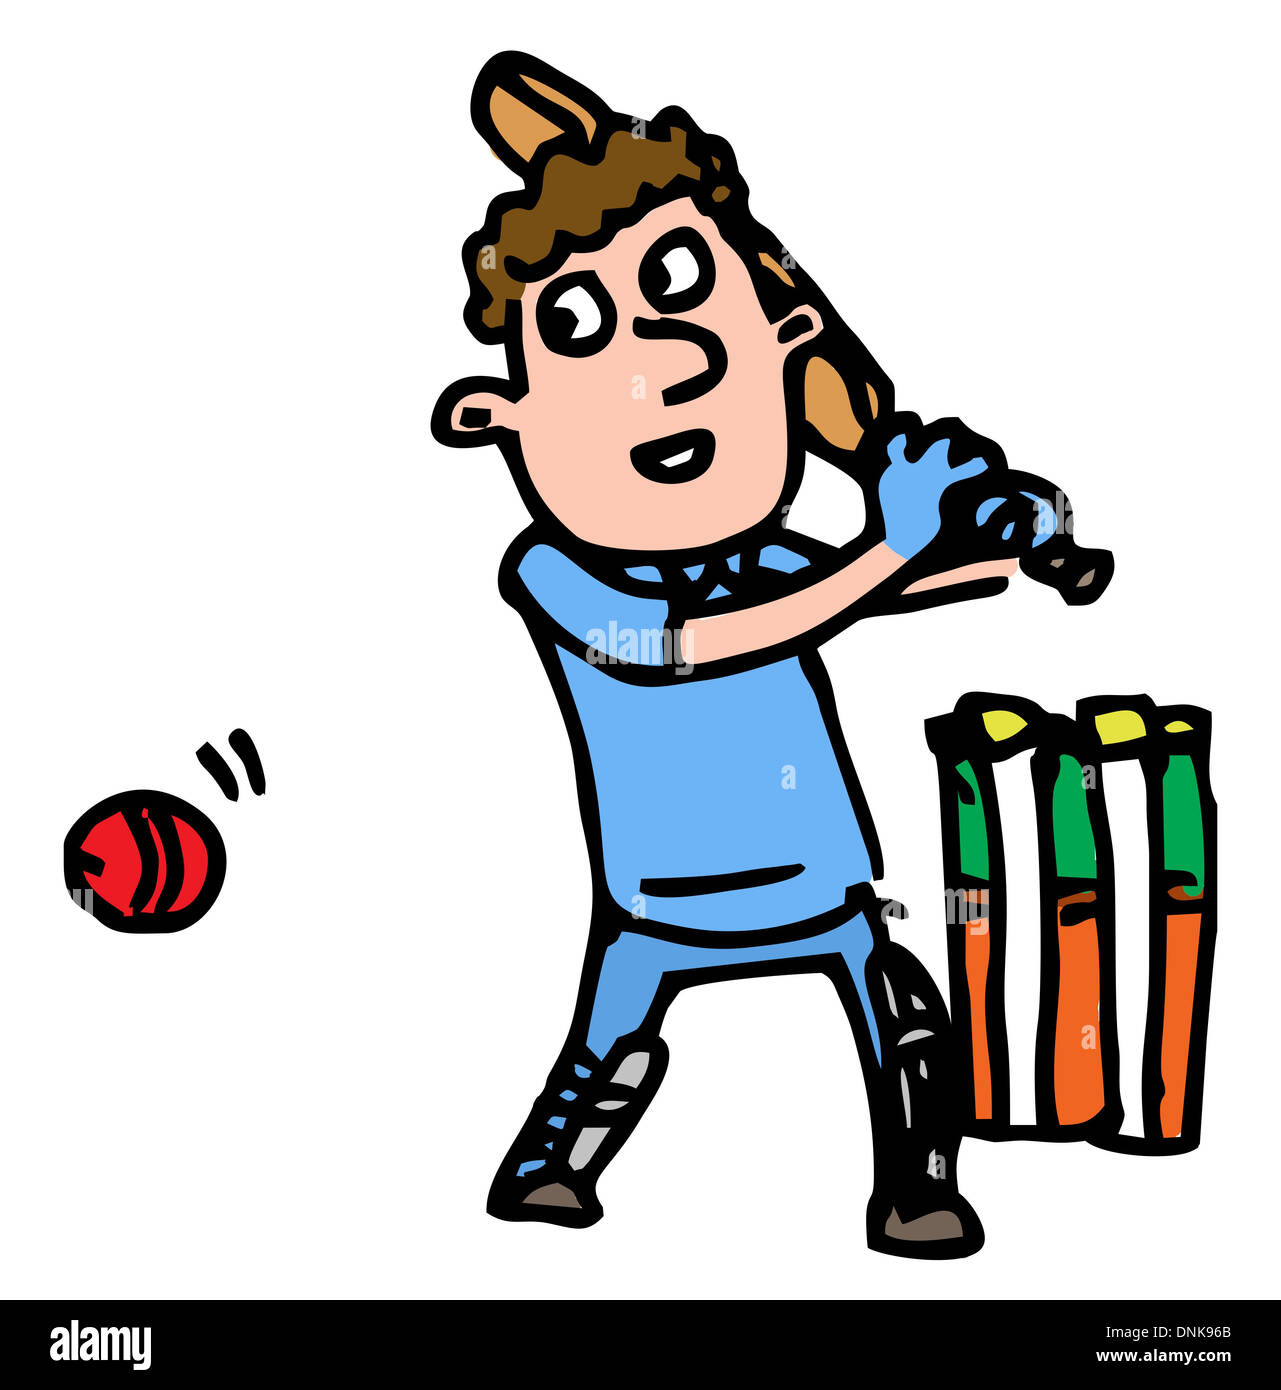 Illustrative representation of a cricketer batting Stock Photo